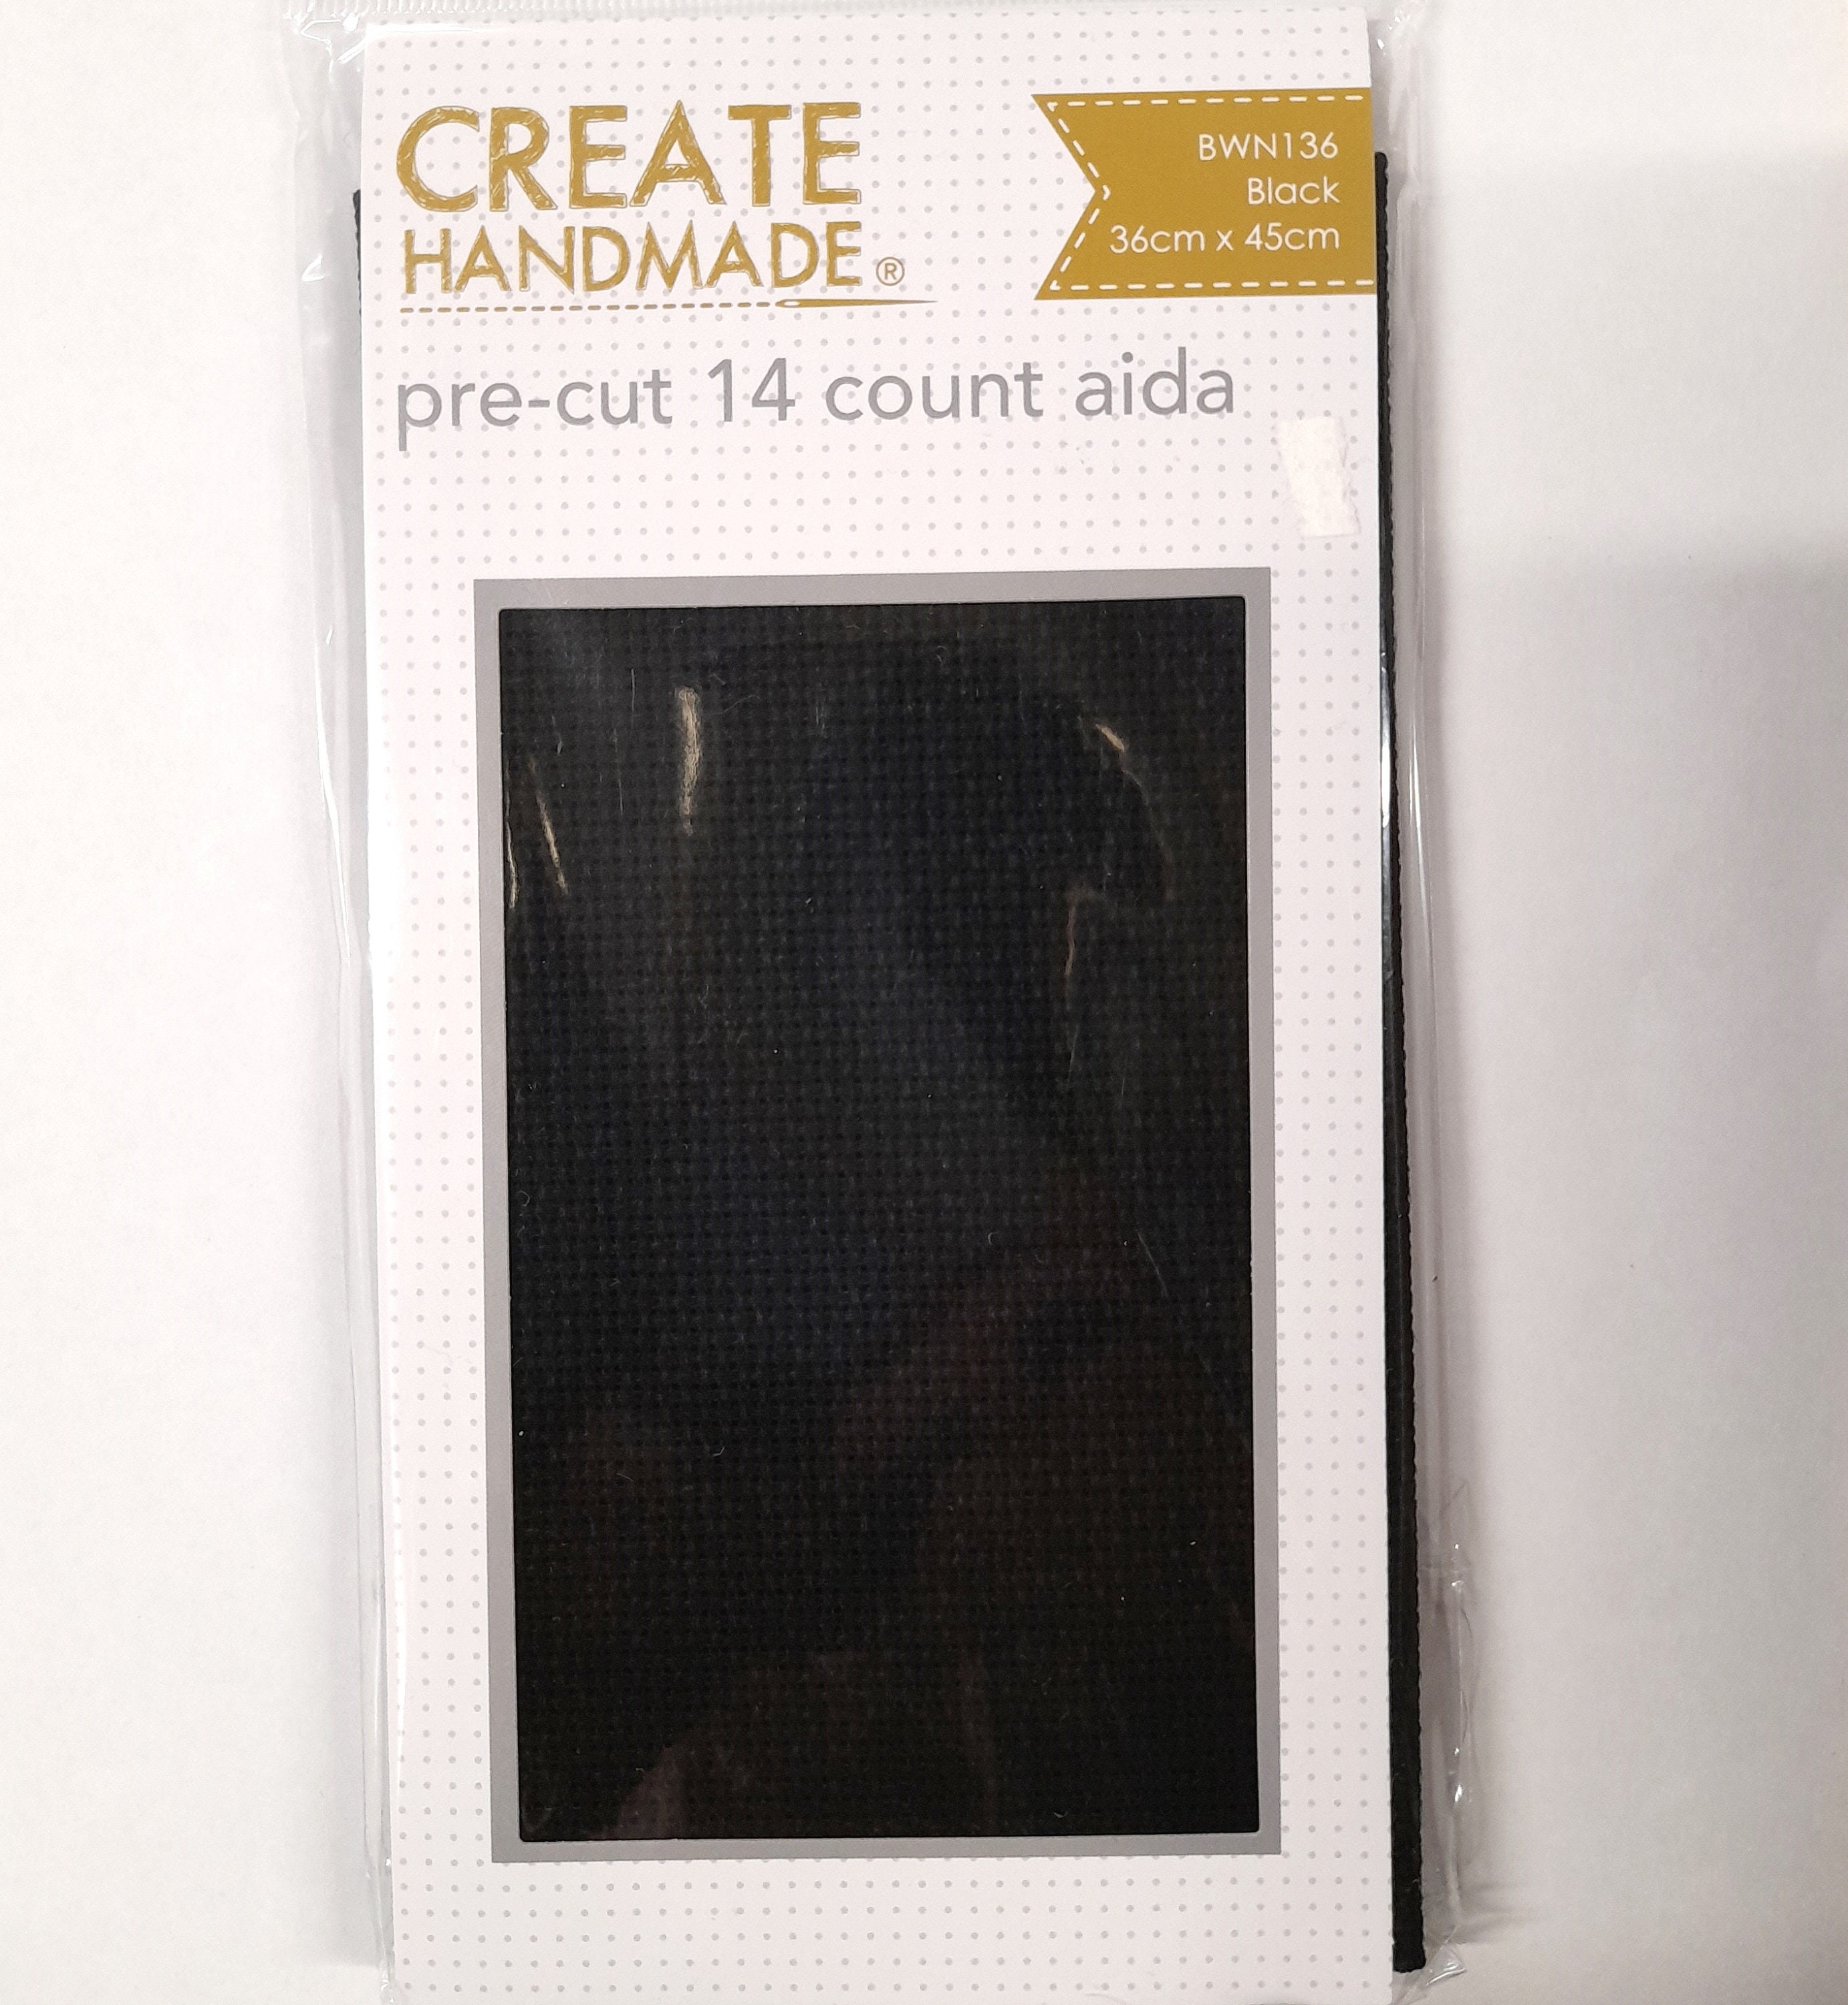 Black Aida Cloth 14 Count Pre-cut 36cm X 45cm for Cross Stitch 